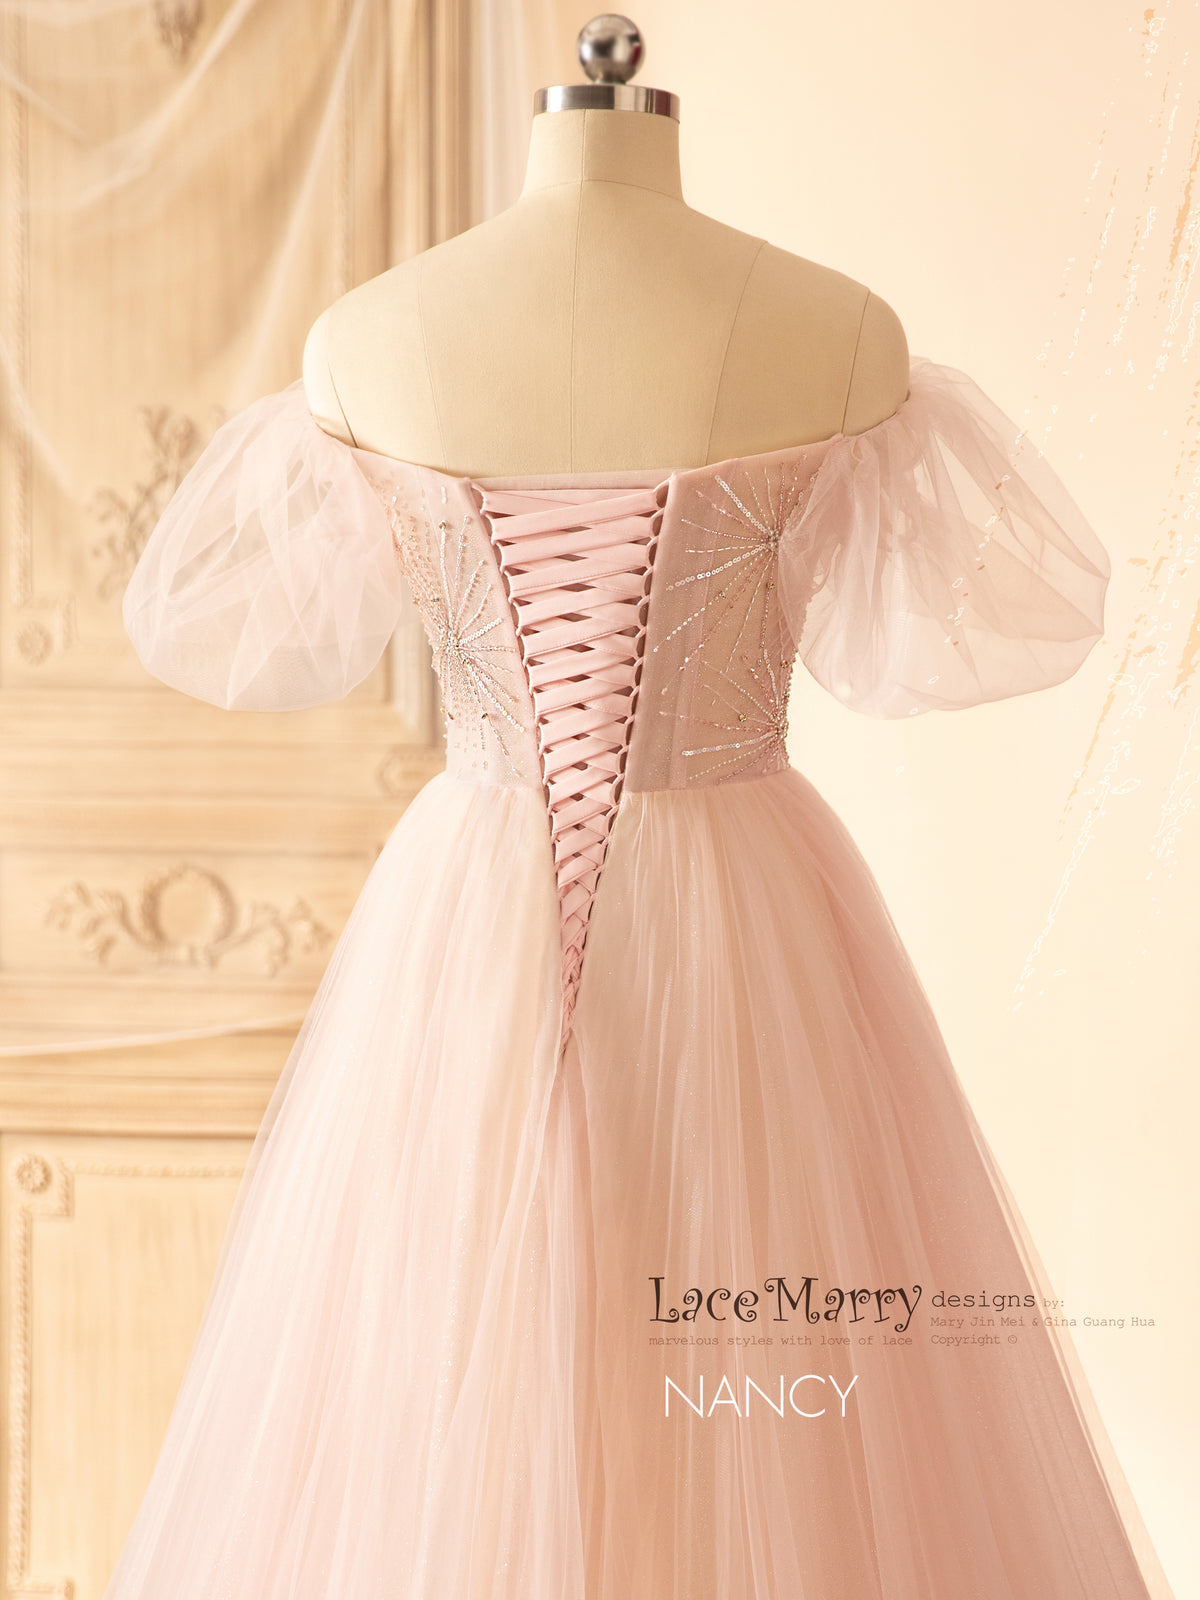 NANCY / Light Pink Wedding Dress with Off Shoulder Puff Sleeves